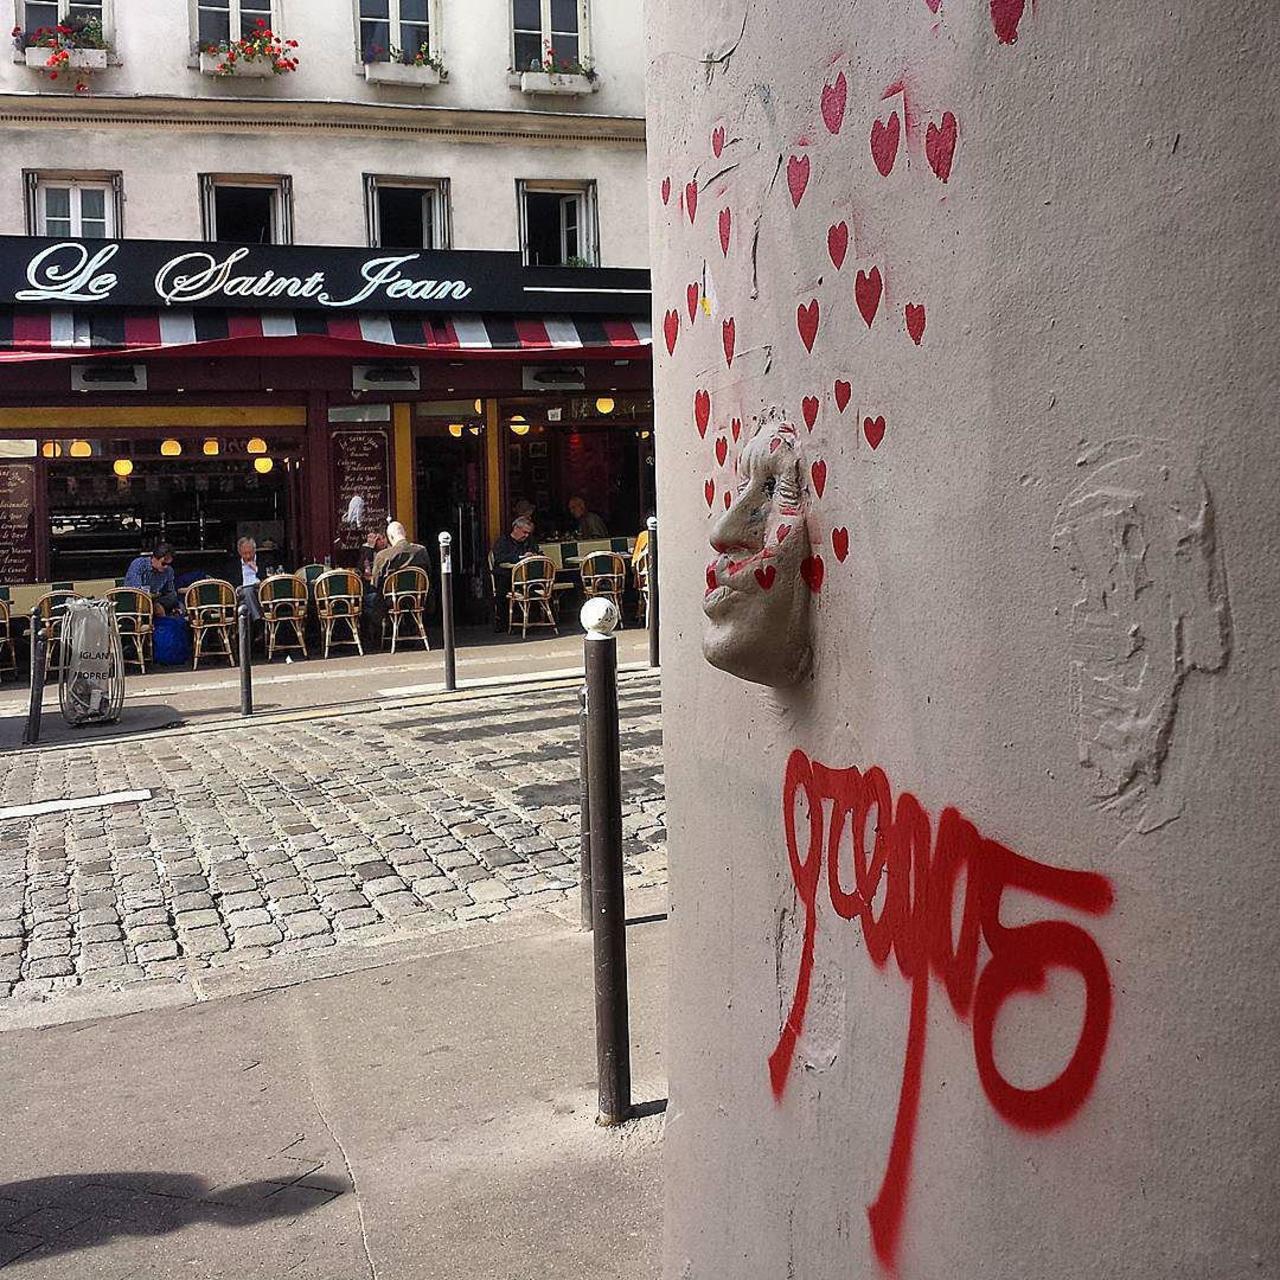 #Paris #graffiti photo by @streetartparischris http://ift.tt/1Vxy1aj #StreetArt http://t.co/YTmwIGaTPv